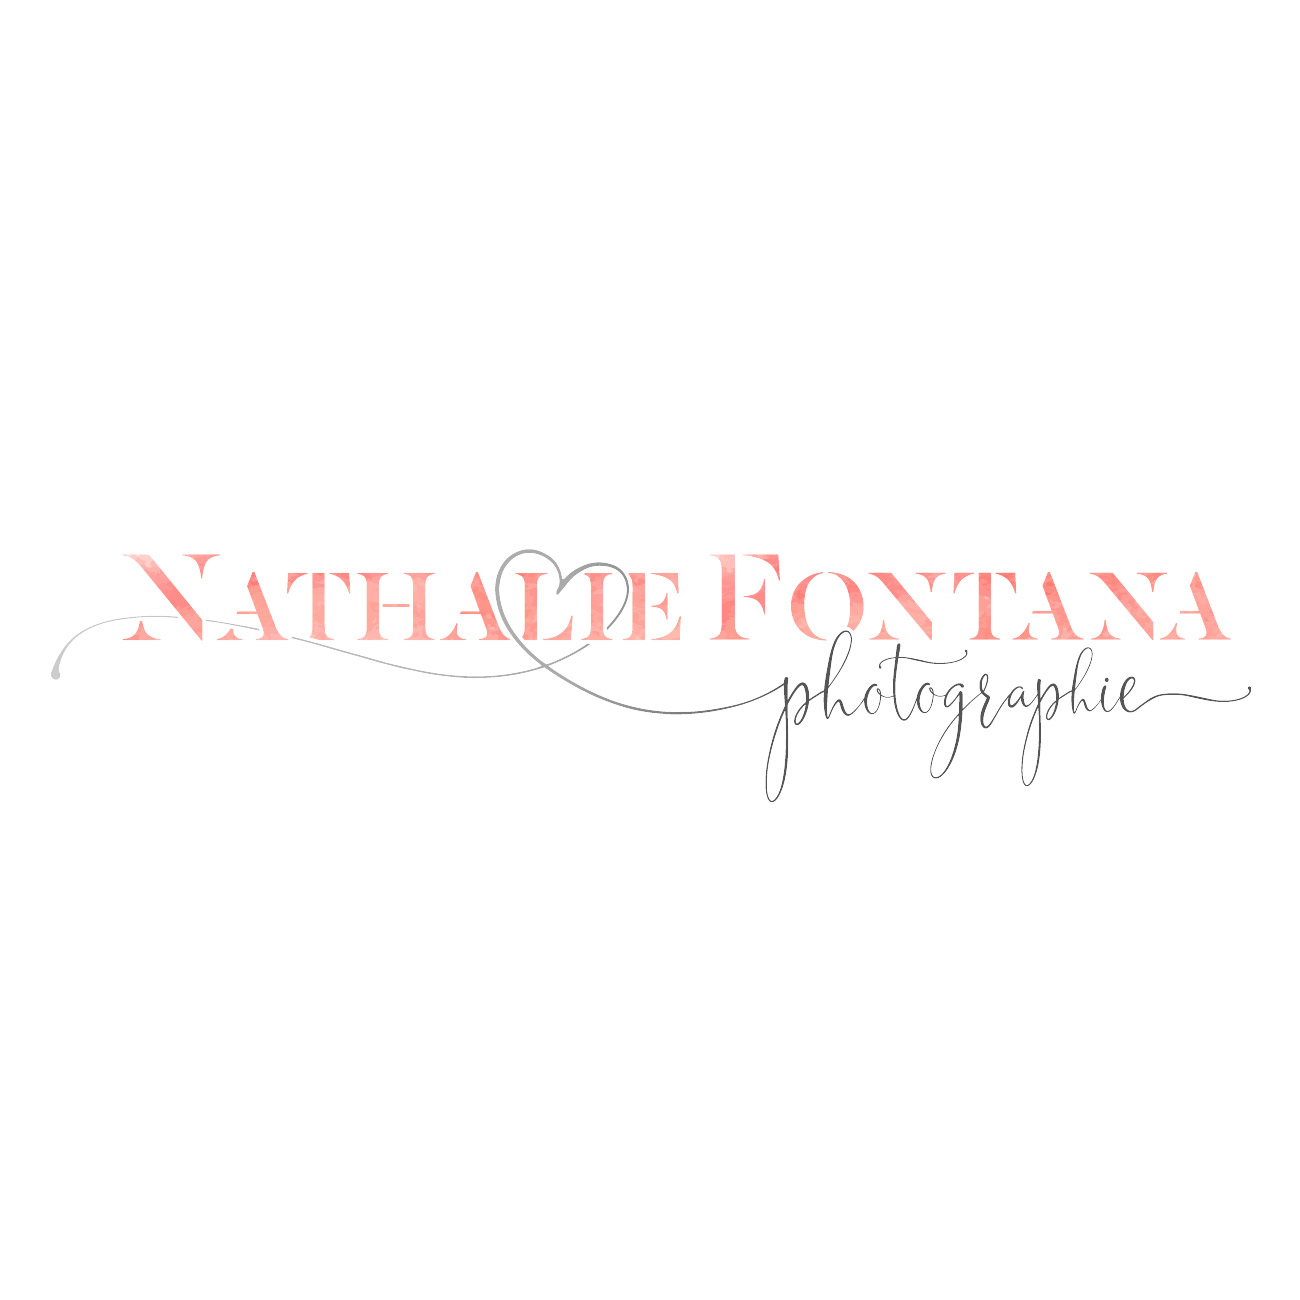 Nathalie Fontana photographe grossesse